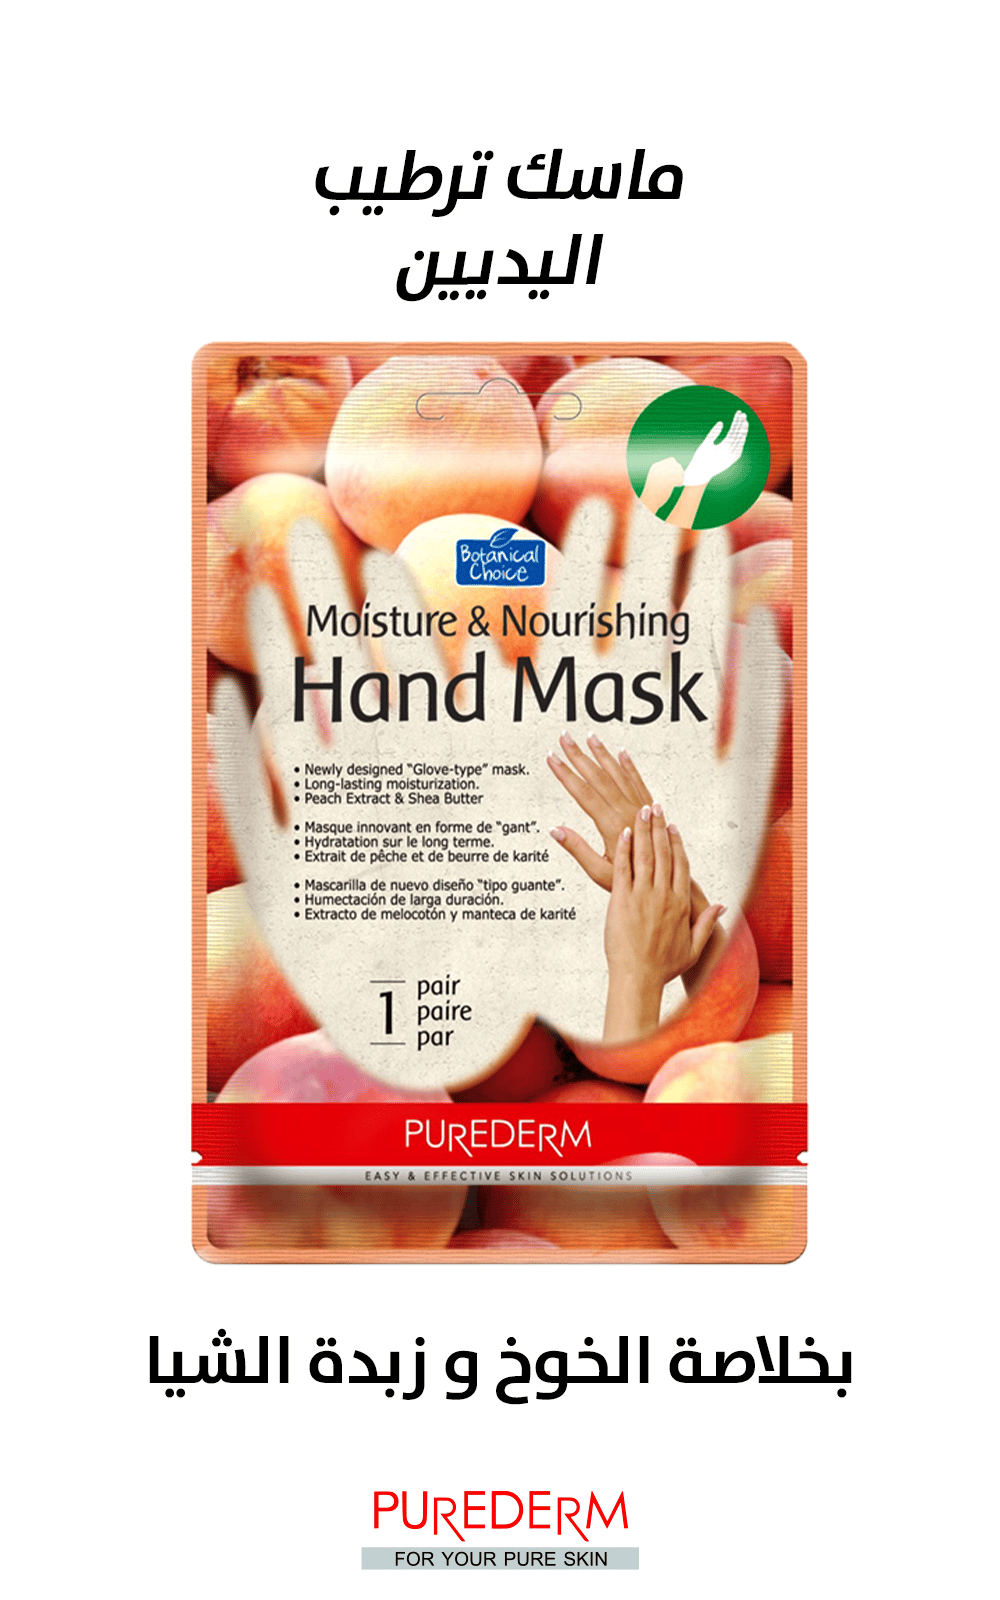 Purederm moisture & nourishing hand mask peach